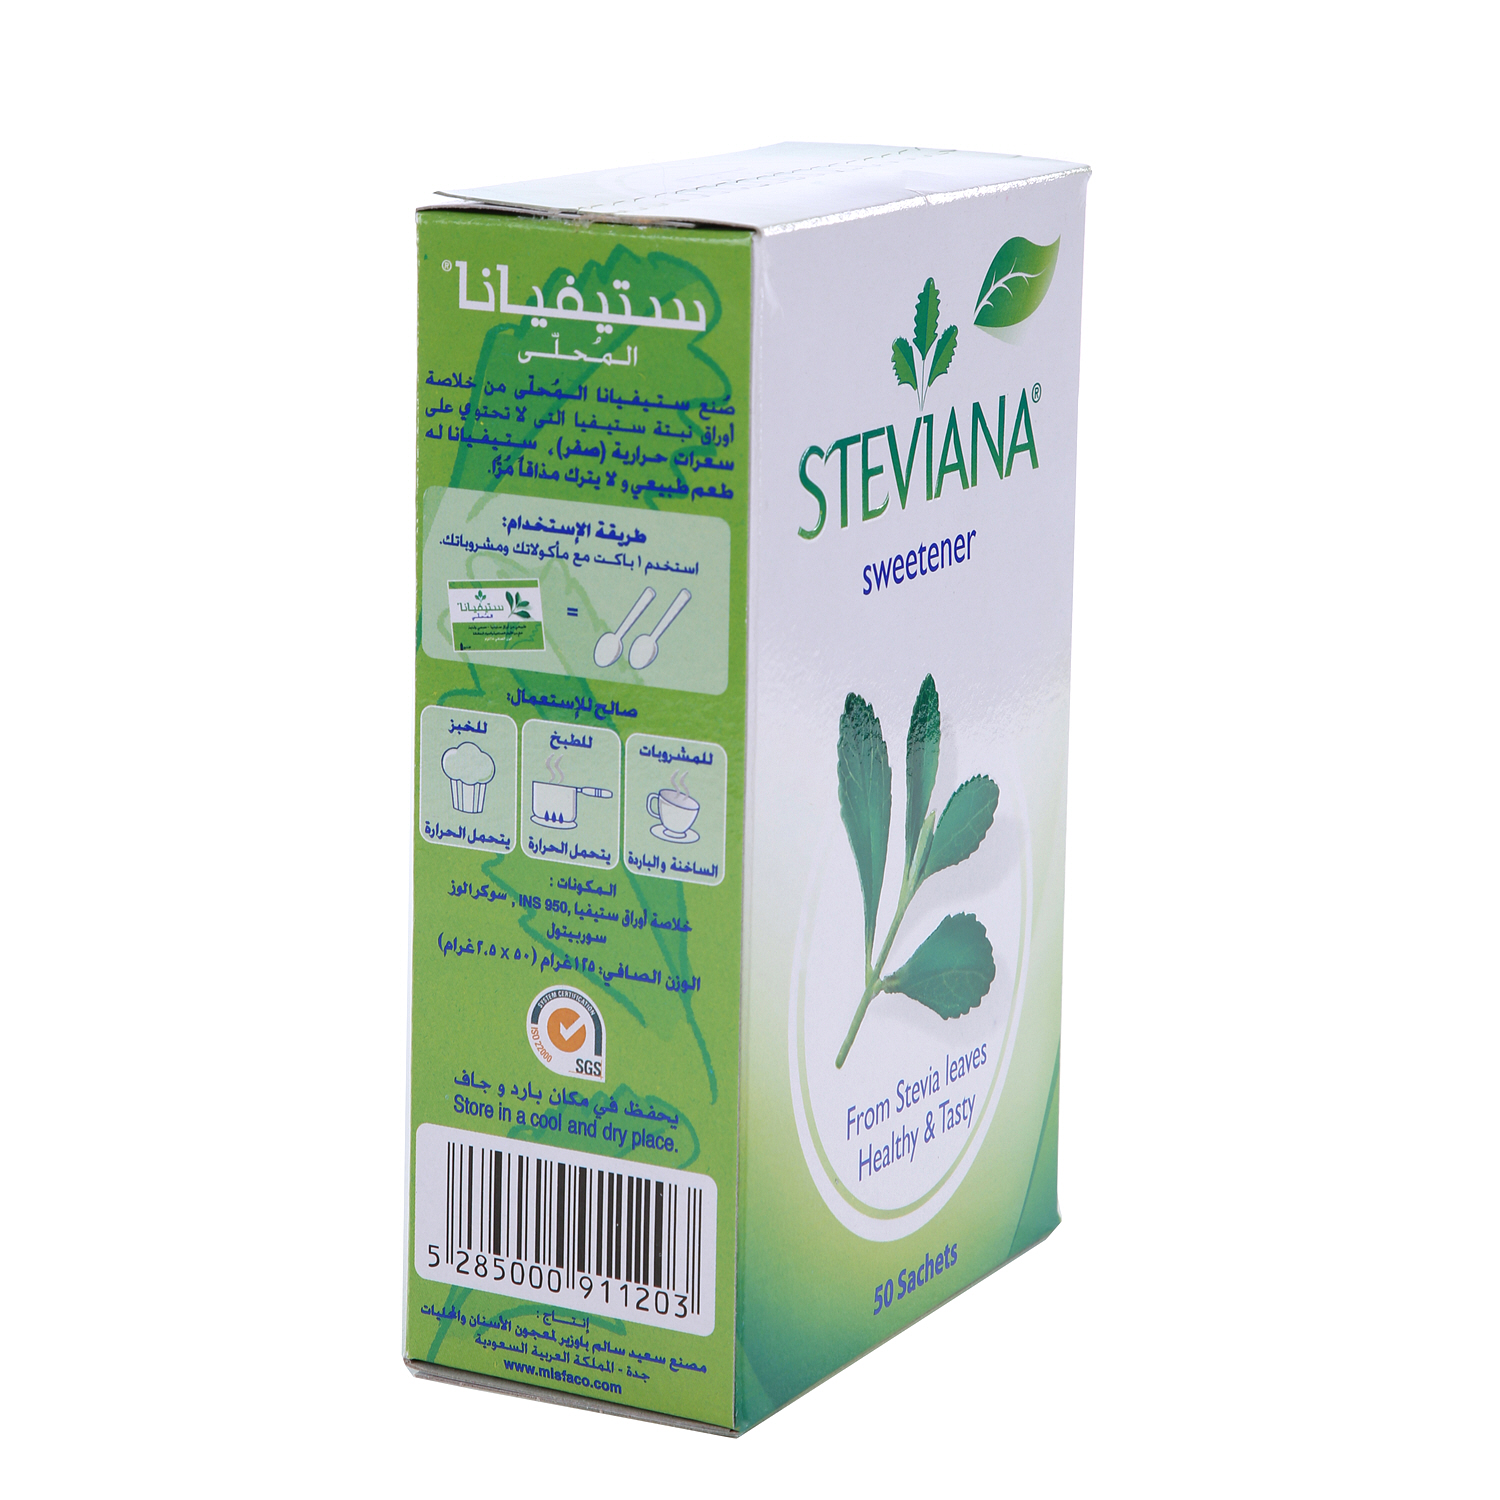 Steviana Sweetener 125gm